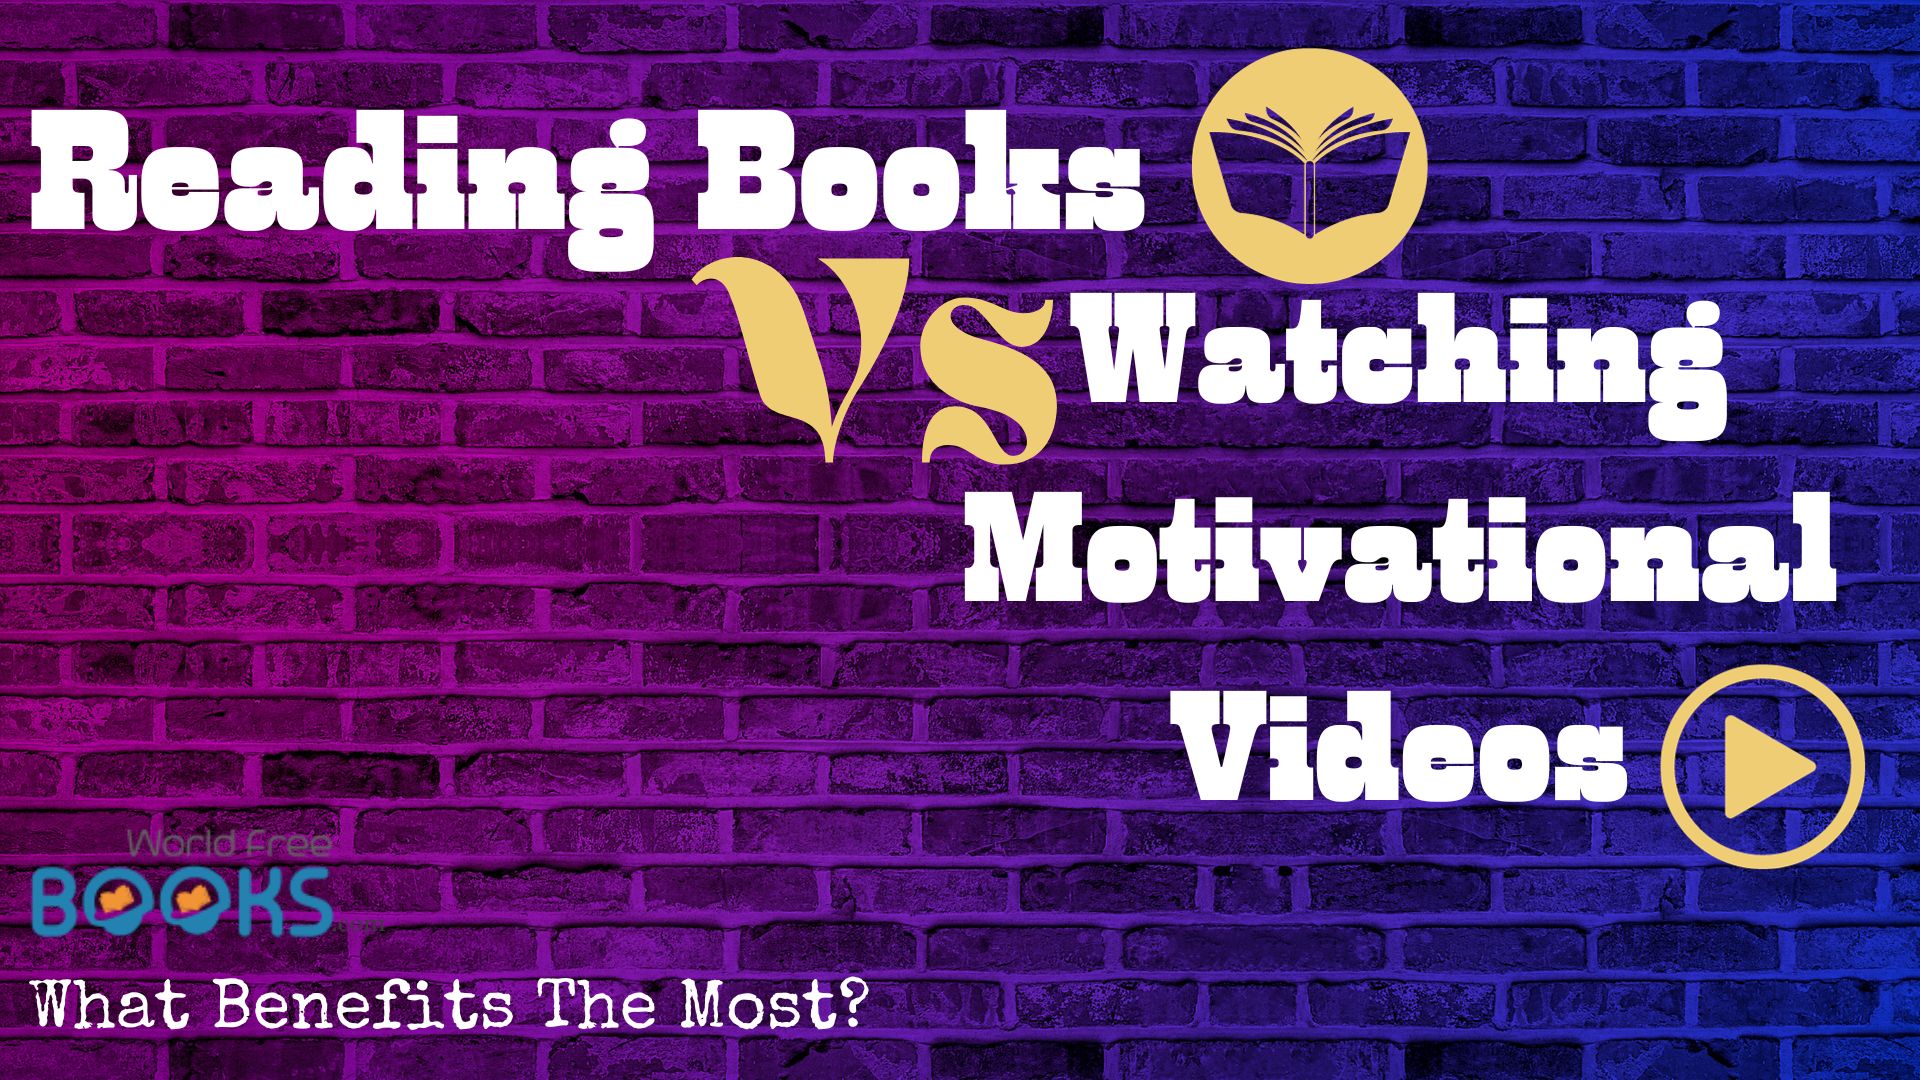 Reading Books Vs Watching Motivational Videos